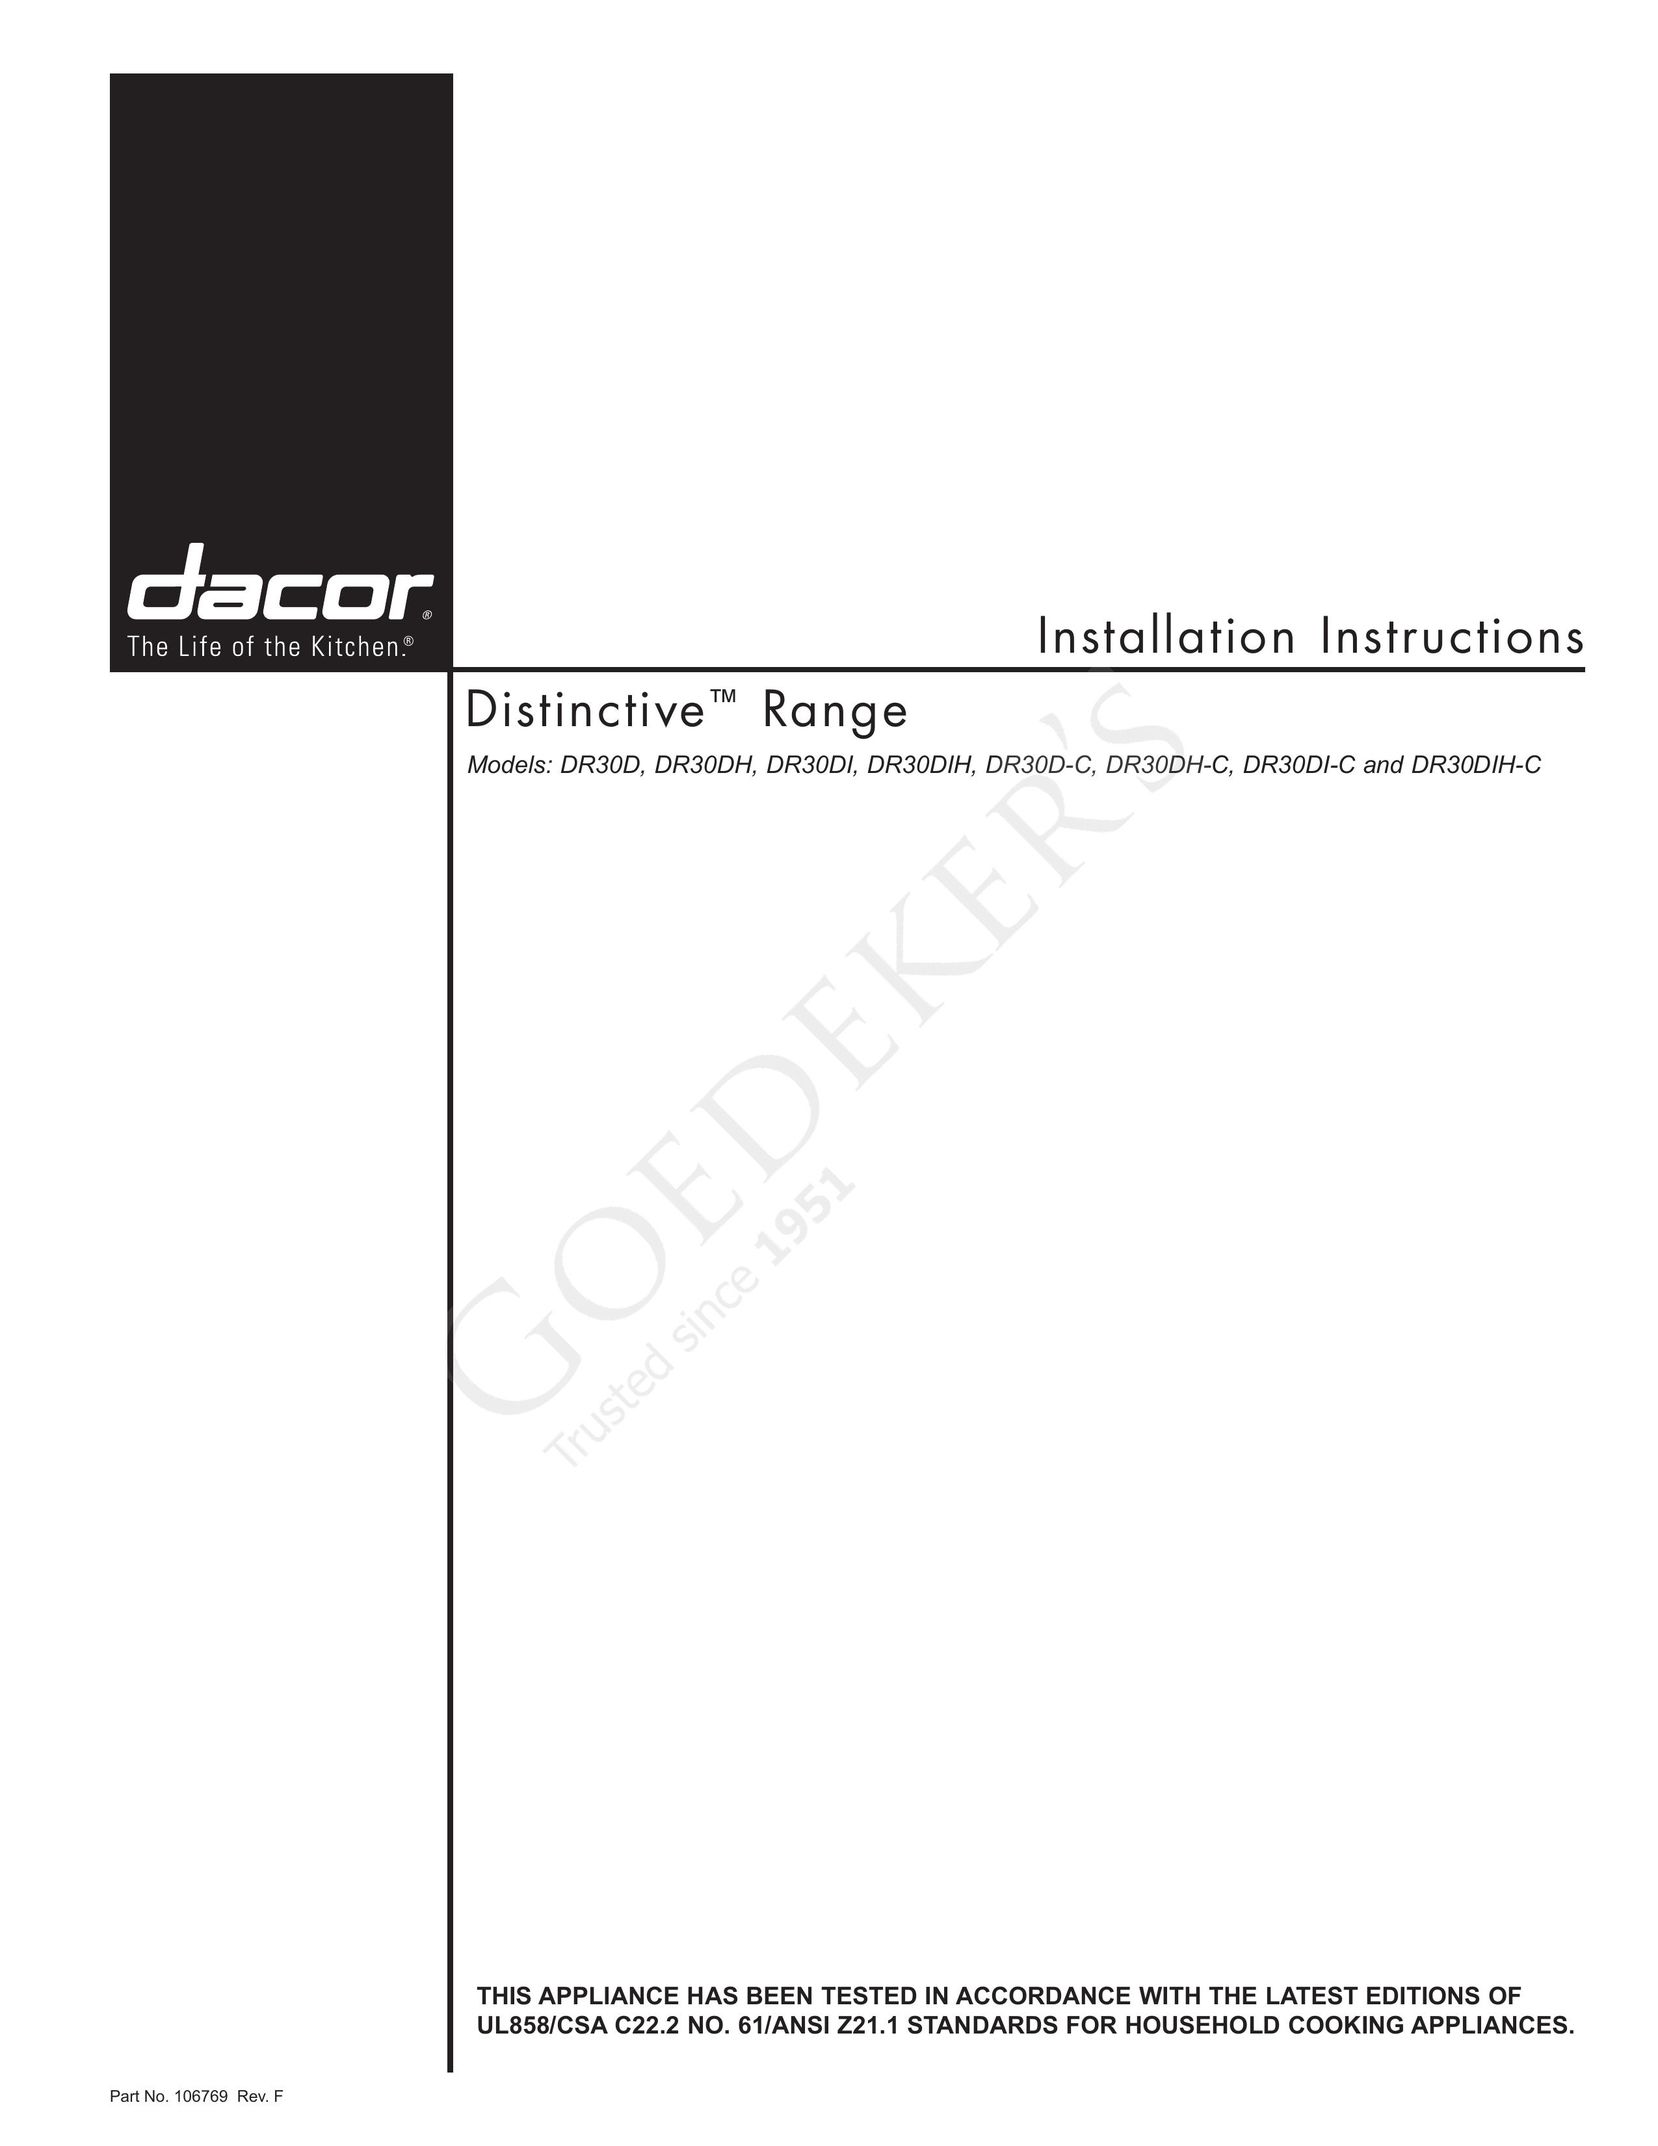 Dacor DR30DI-C Range User Manual